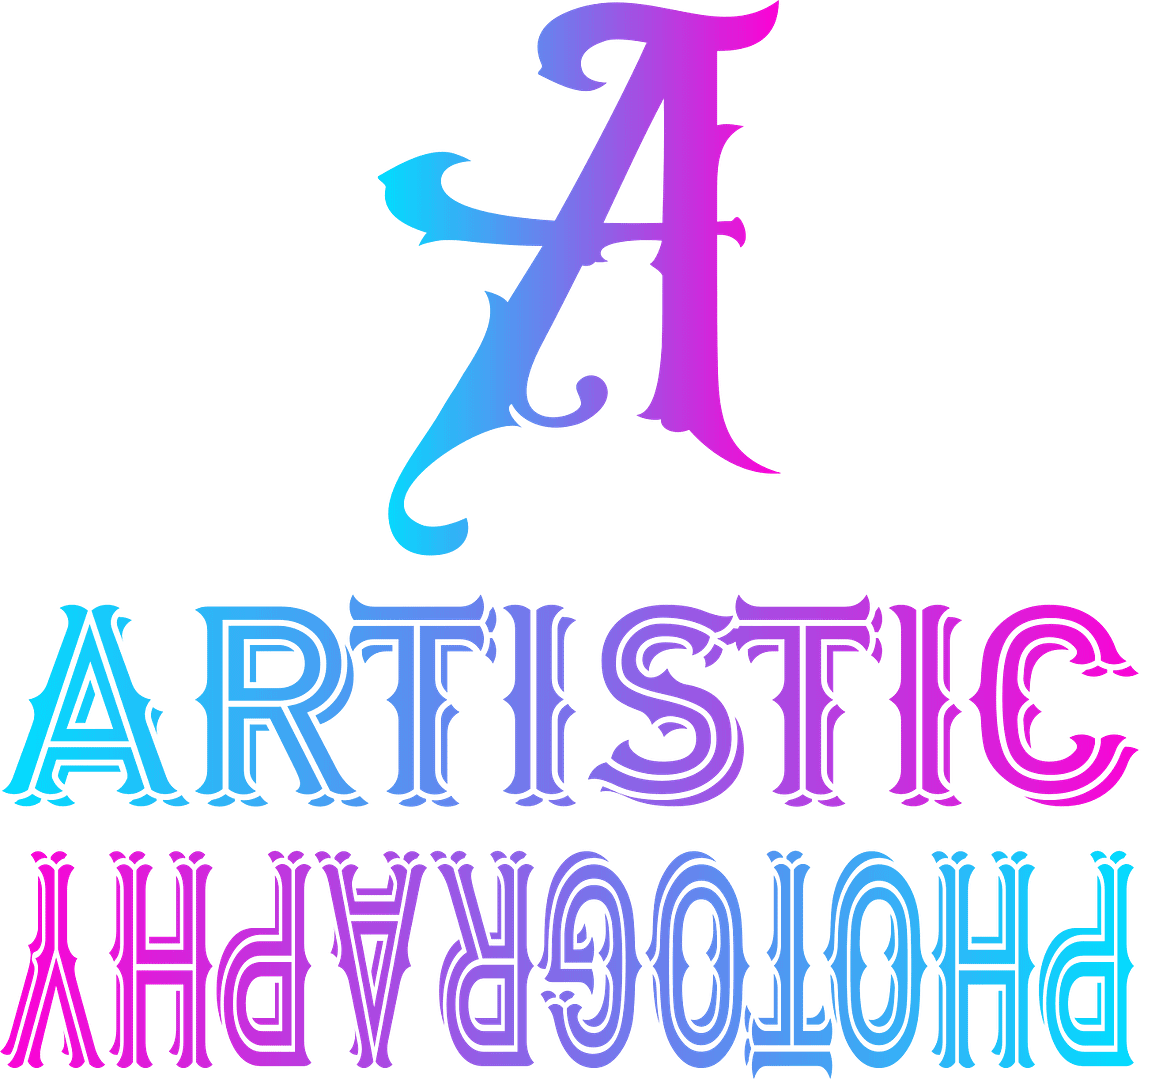 Artistic Photography Logo